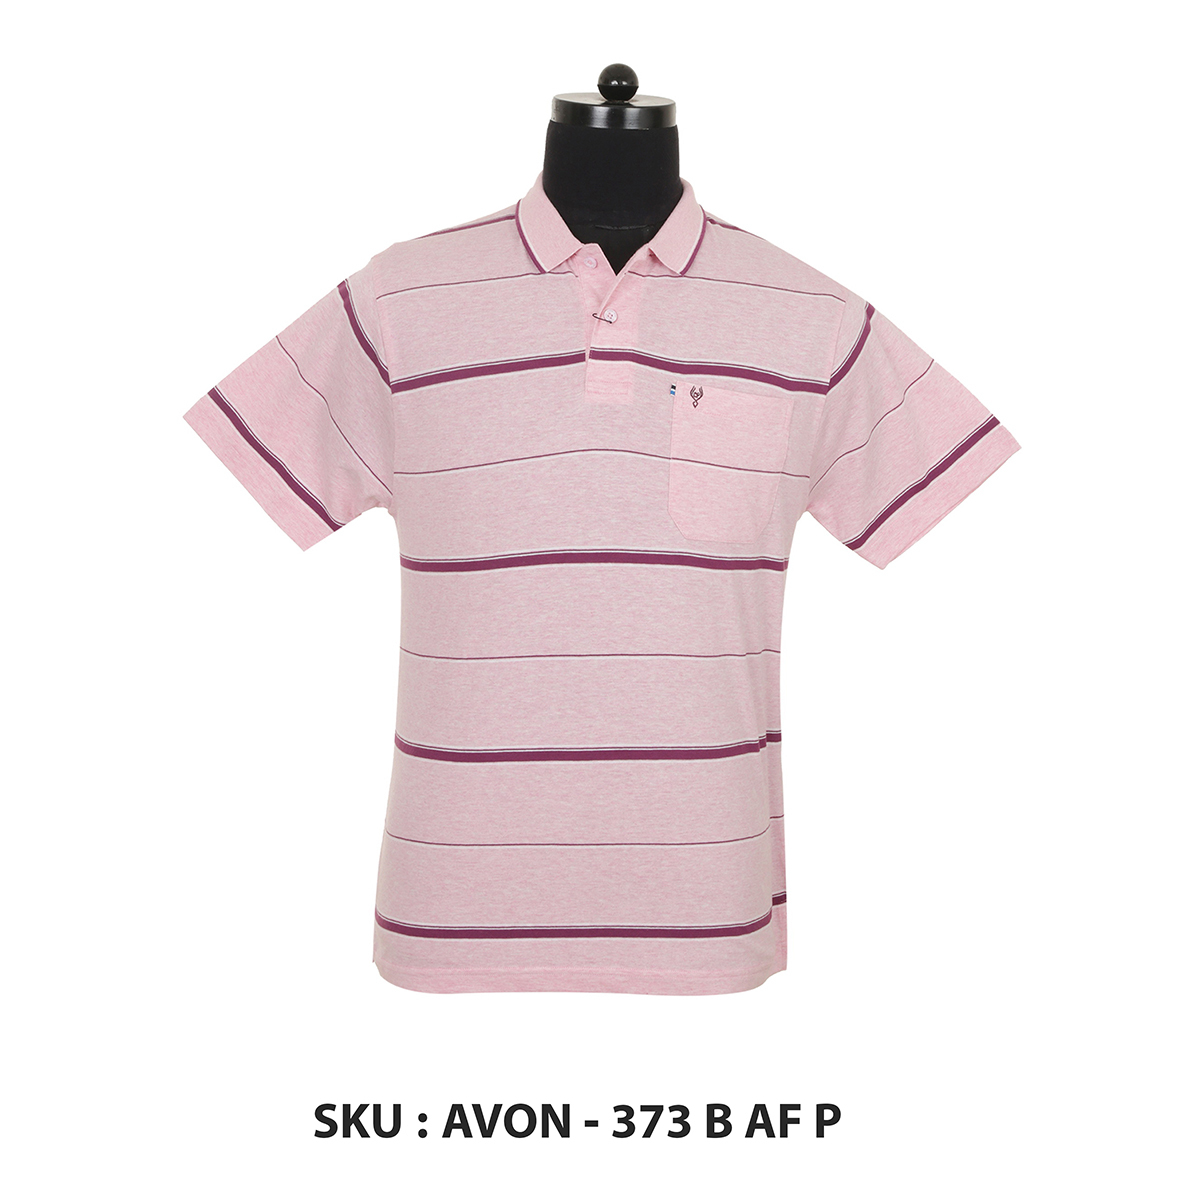 Classic Polo Mens T Shirt Avon - 373 B Af P Pink S